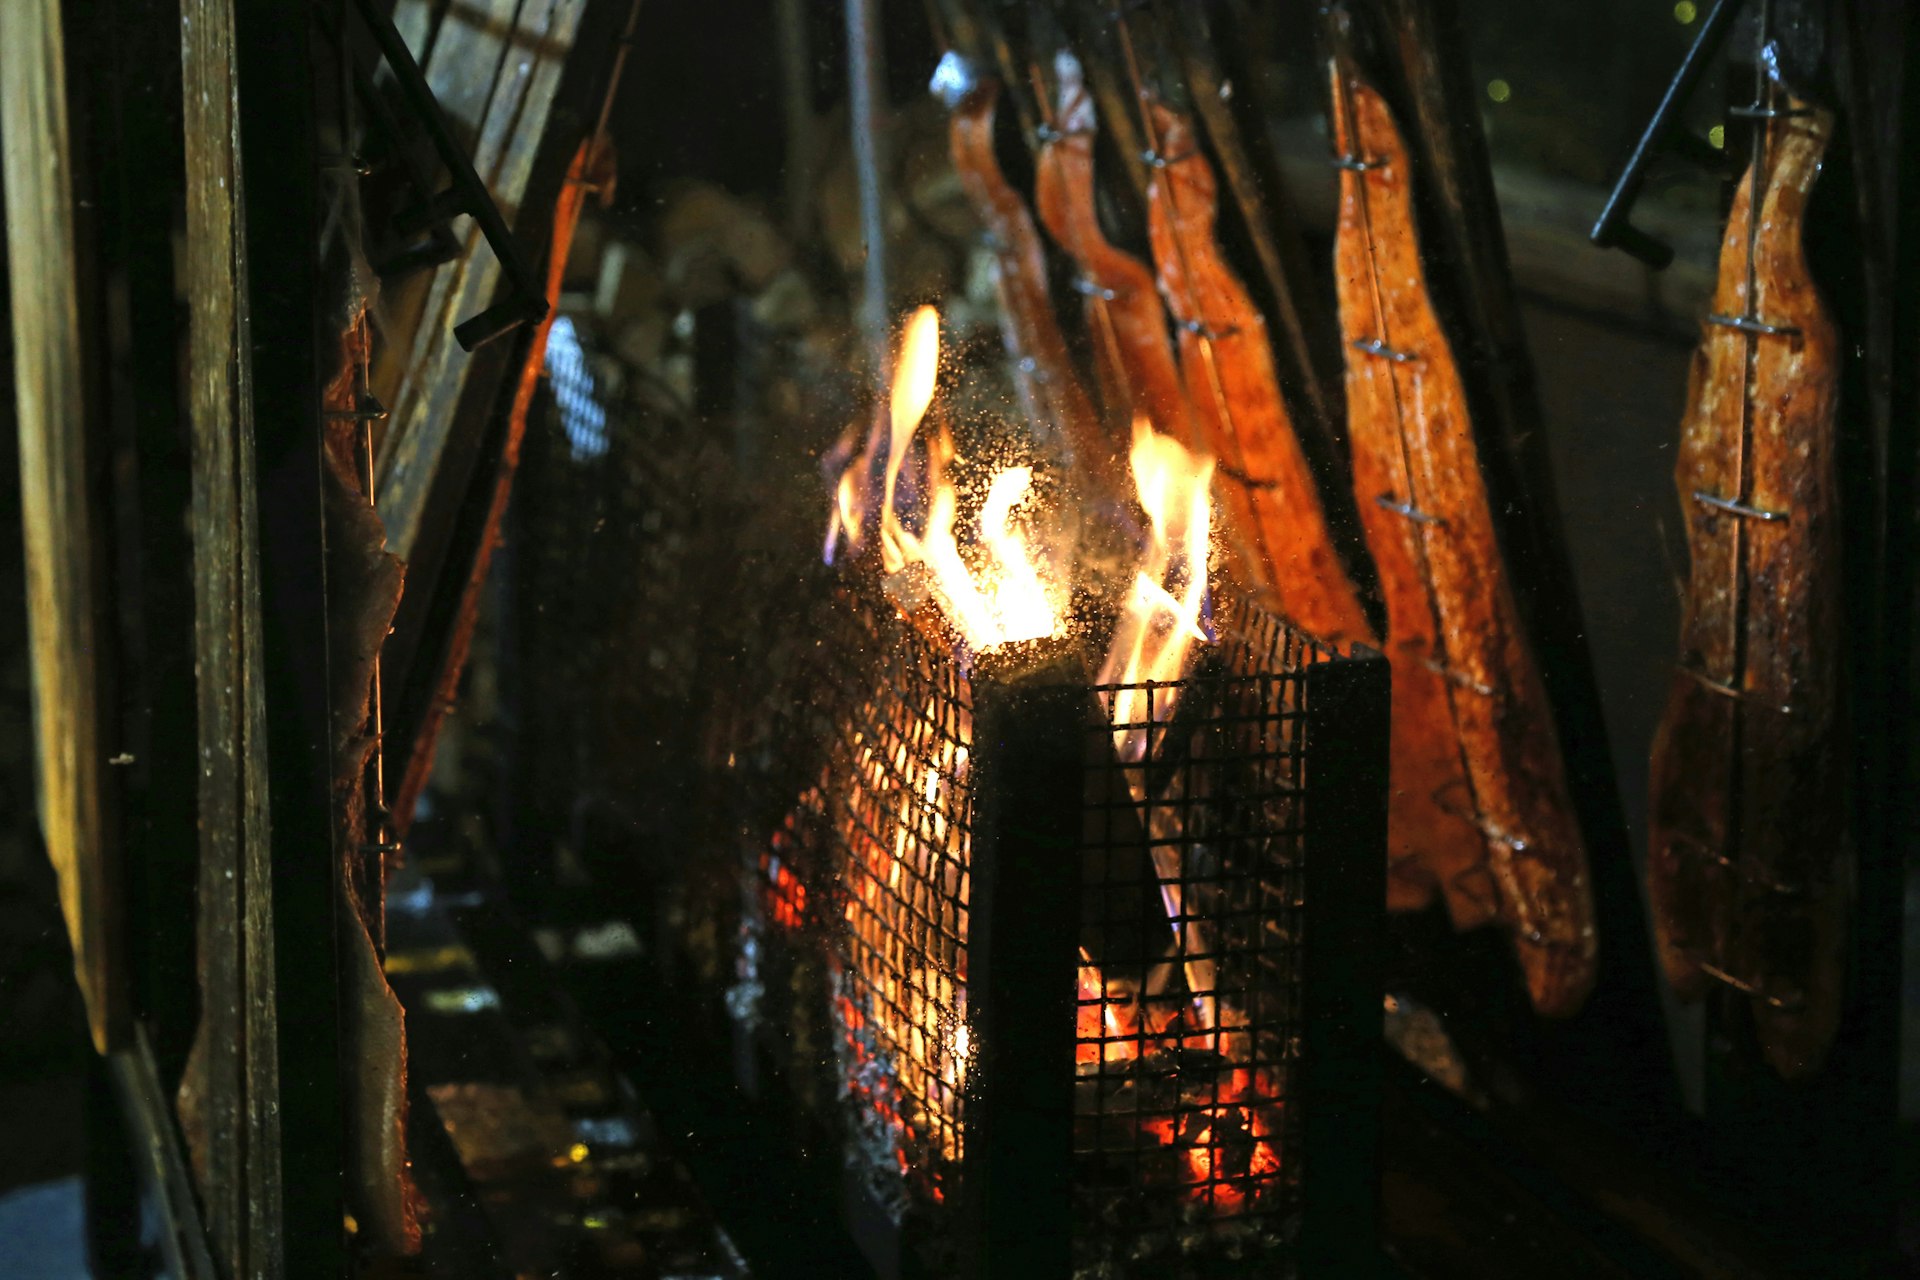 Flammlachs fire-roasted salmon at a Christmas market